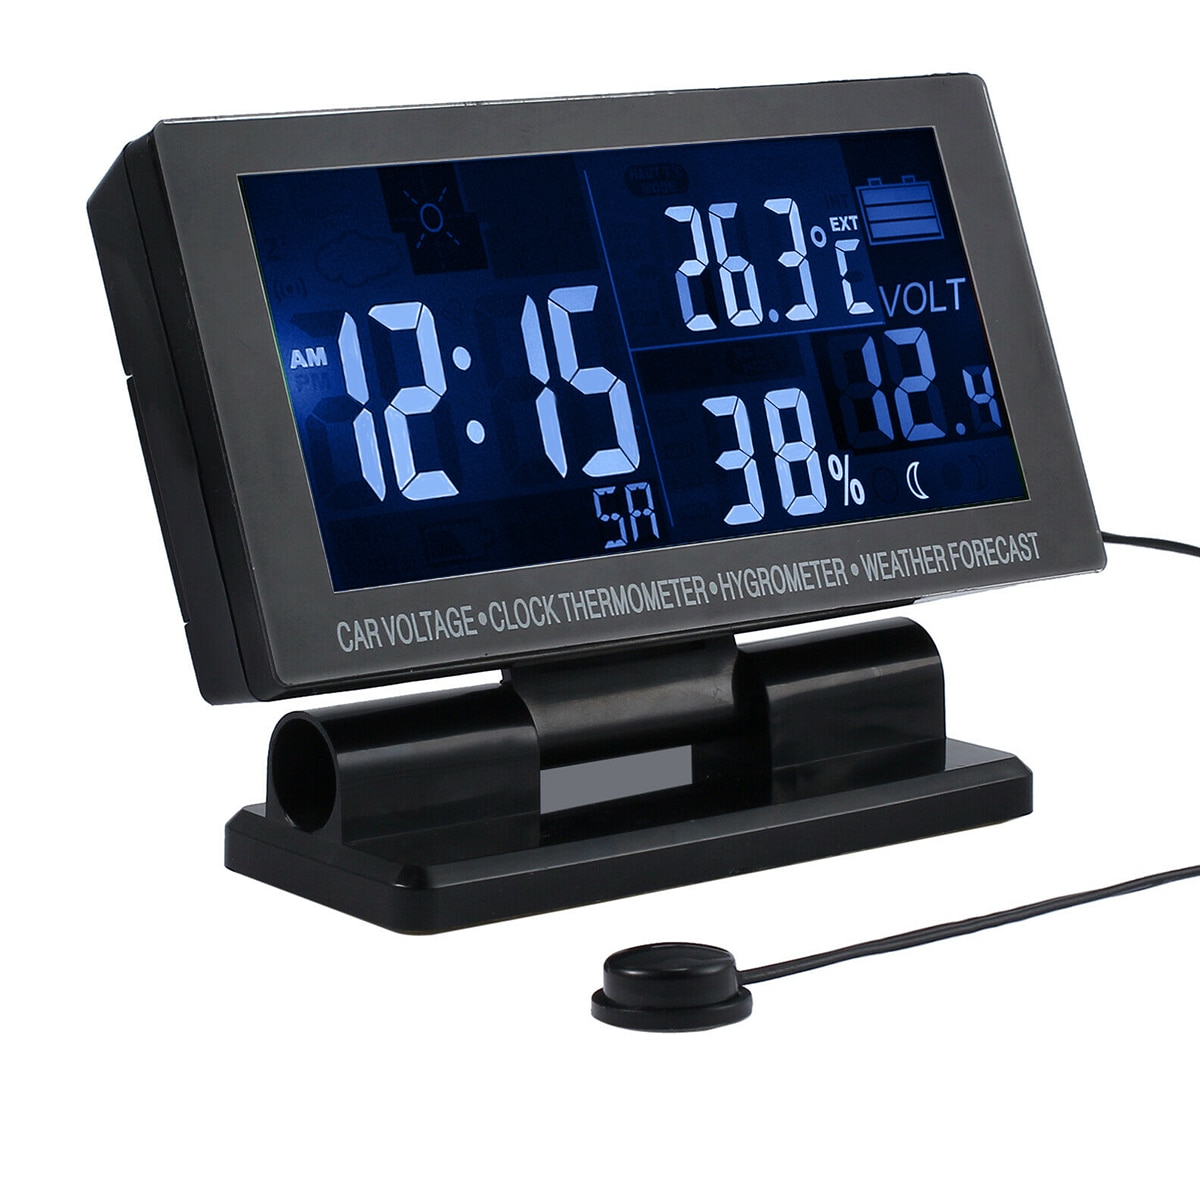 5-In-1 Lcd Digitale Auto Klok Thermometer Hygrometer Weersverwachting Voltmeter Universele Voor 12V 24V voertuigen